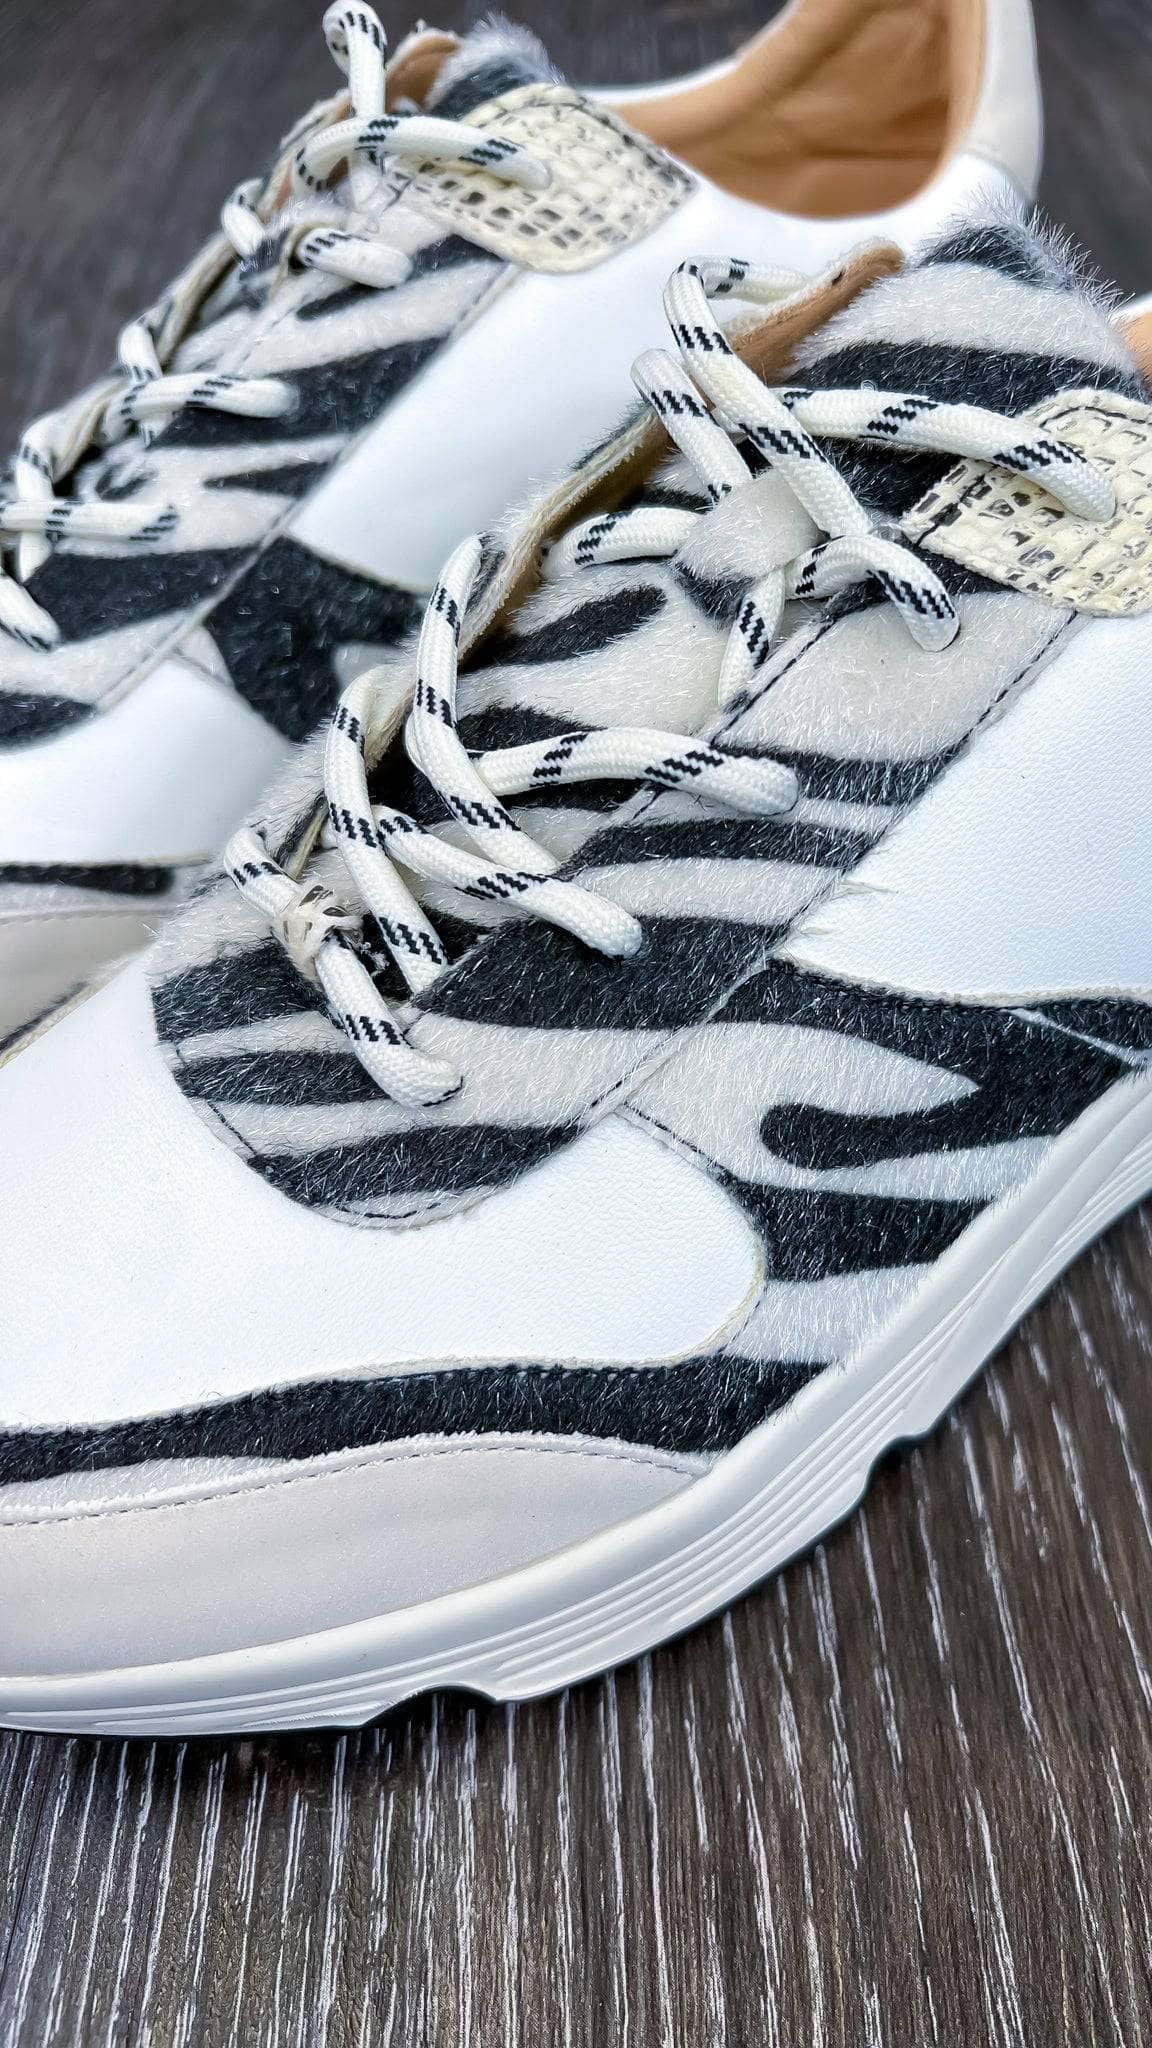 Beige Penelope Sneakers - The ZigZag Stripe